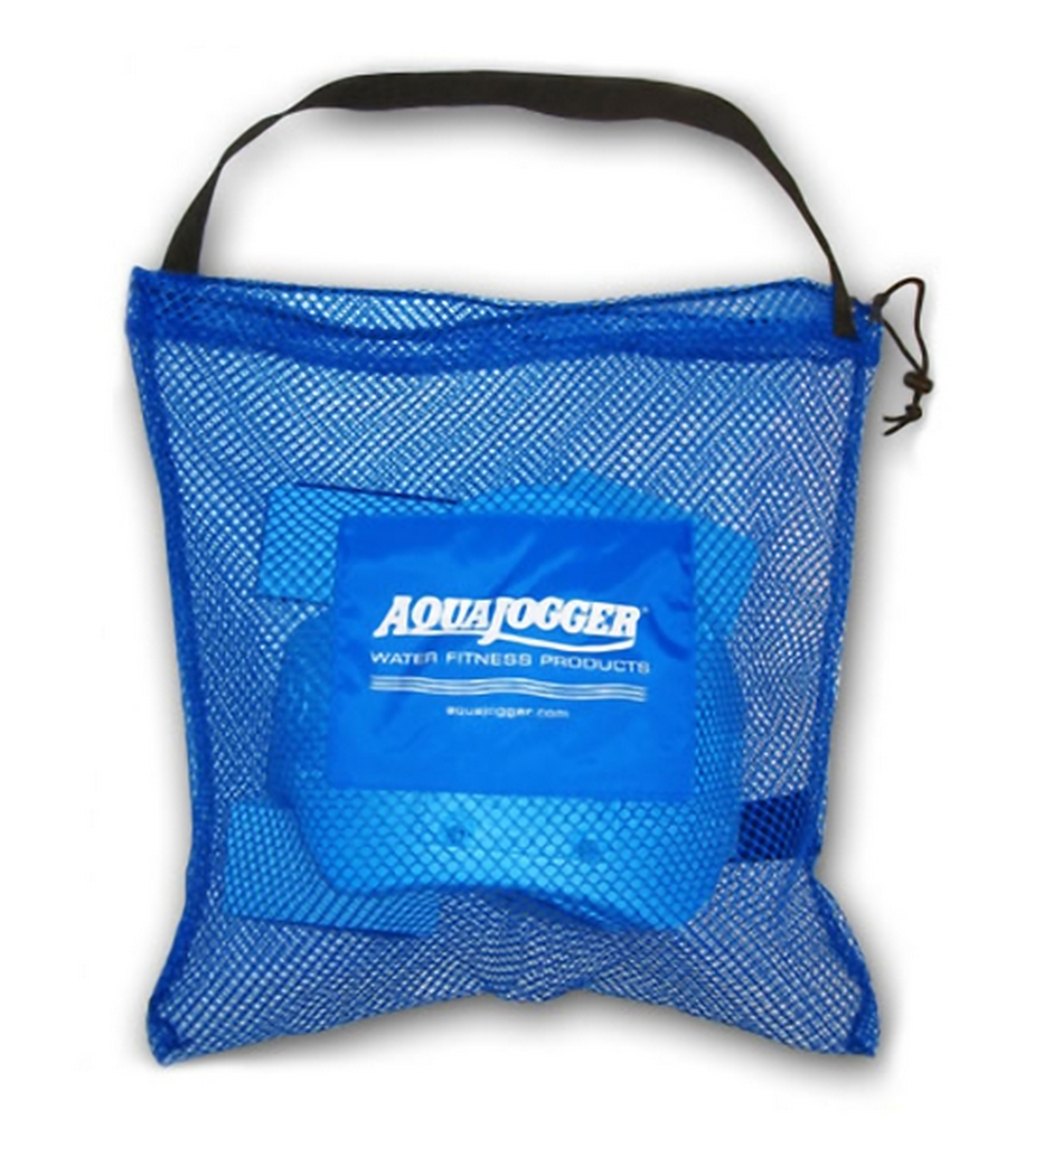 Aquajogger Large Mesh Tote Bag - Blue - Swimoutlet.com